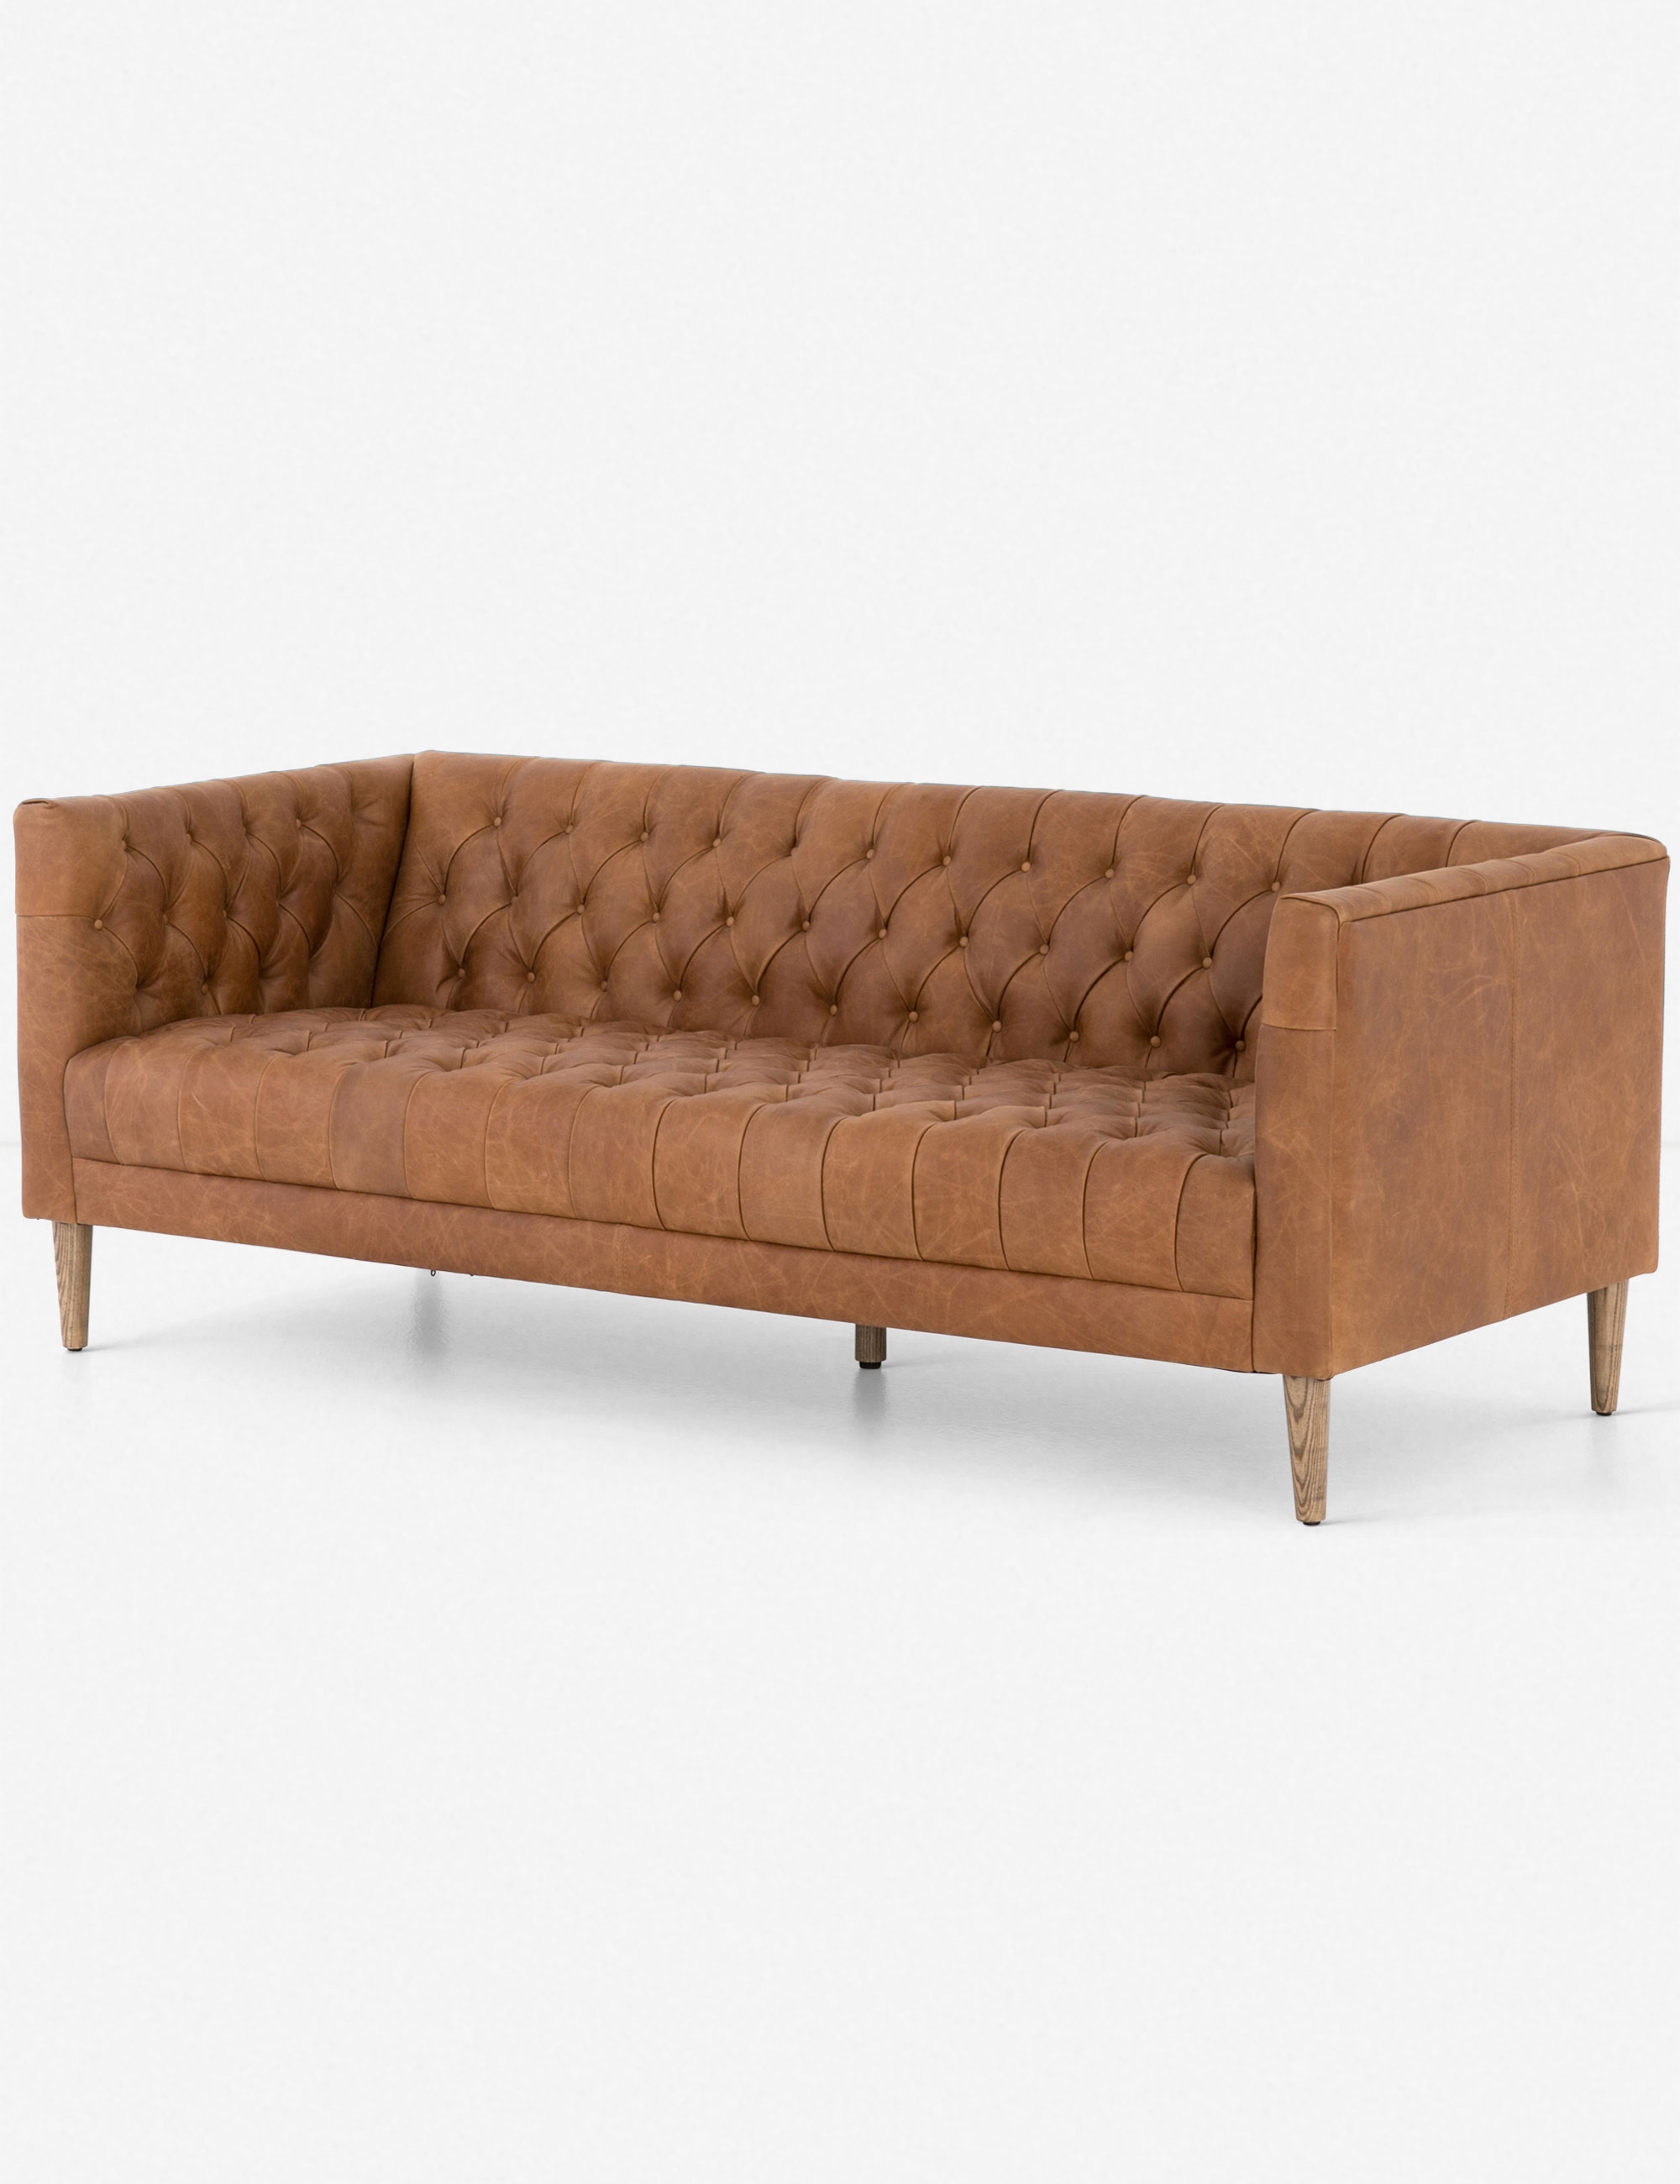 Breanne Leather Sofa - Image 7